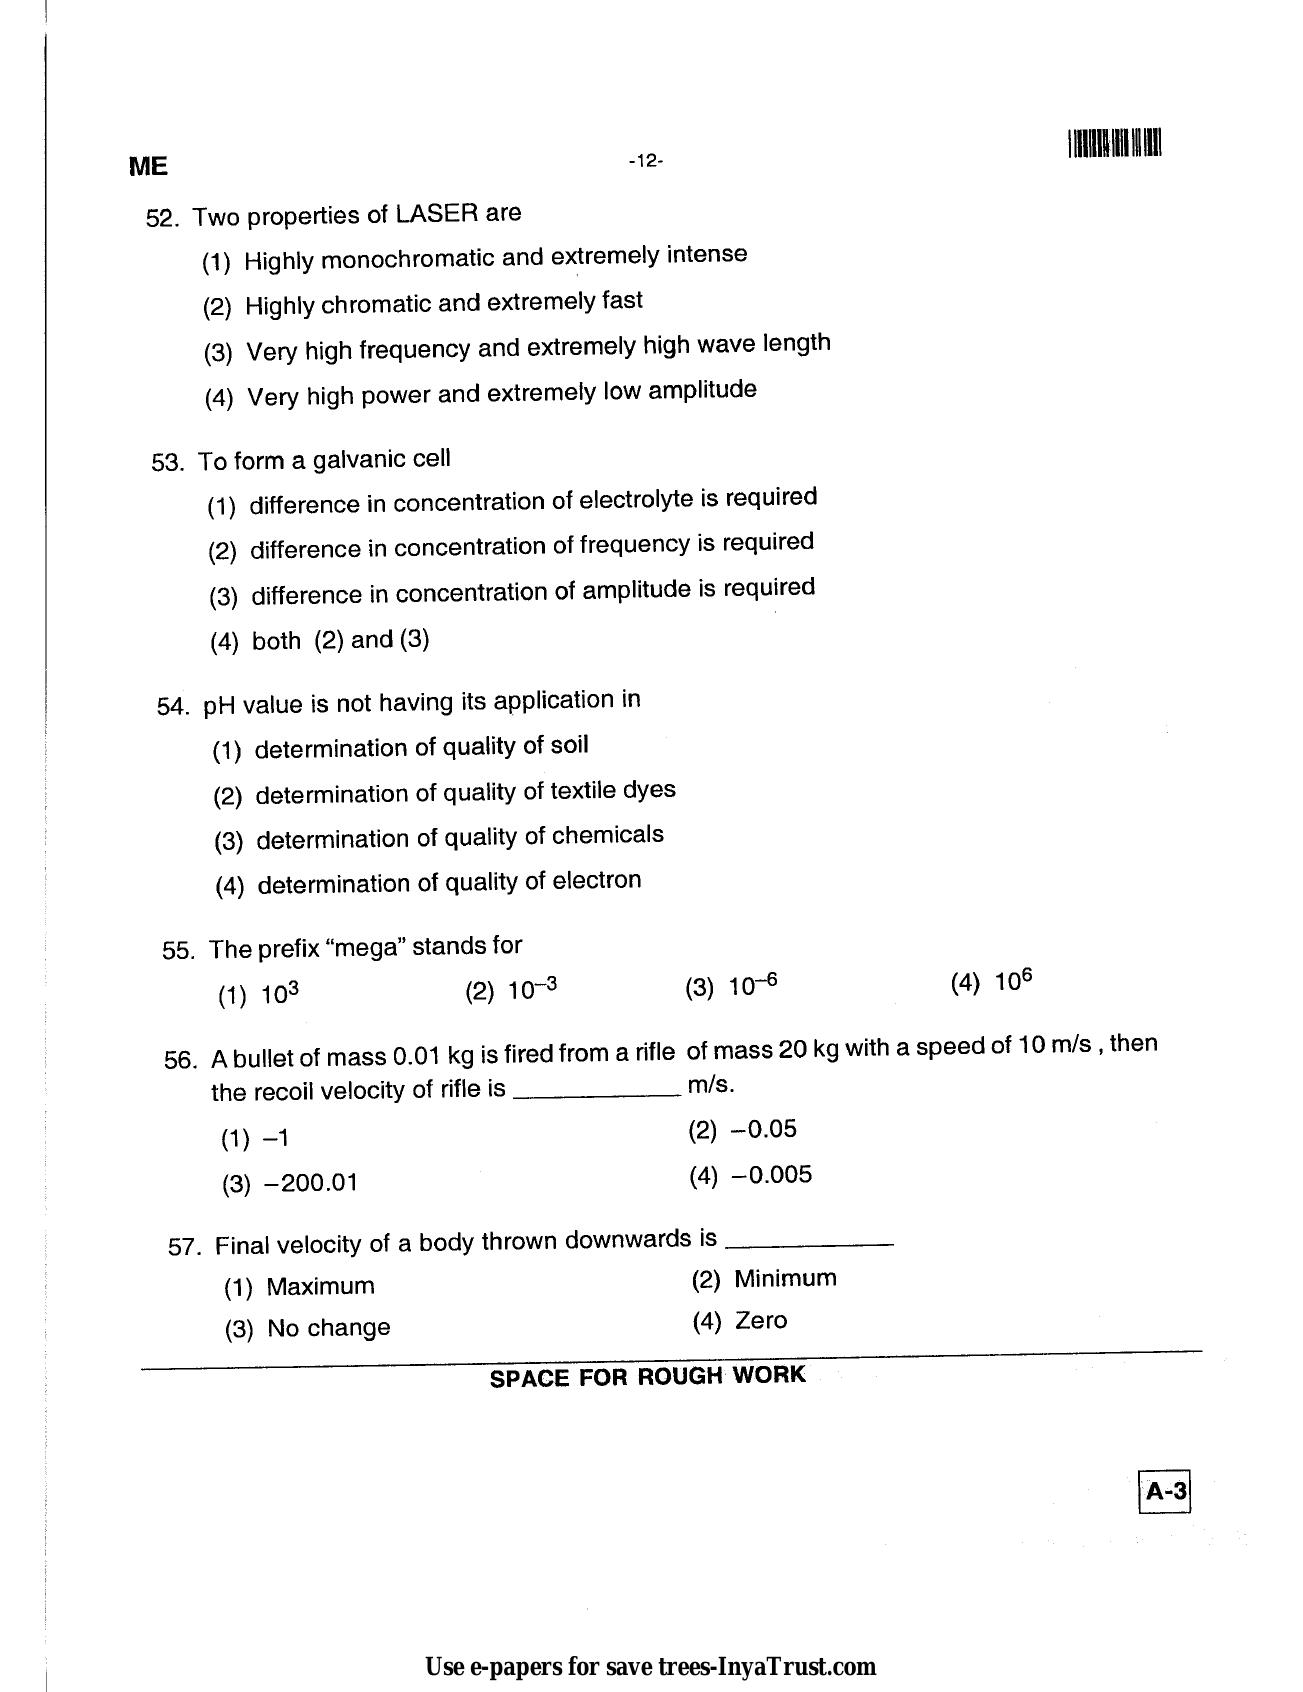 Karnataka Diploma CET- 2013 Mechanical Engineering Question Paper - Page 10